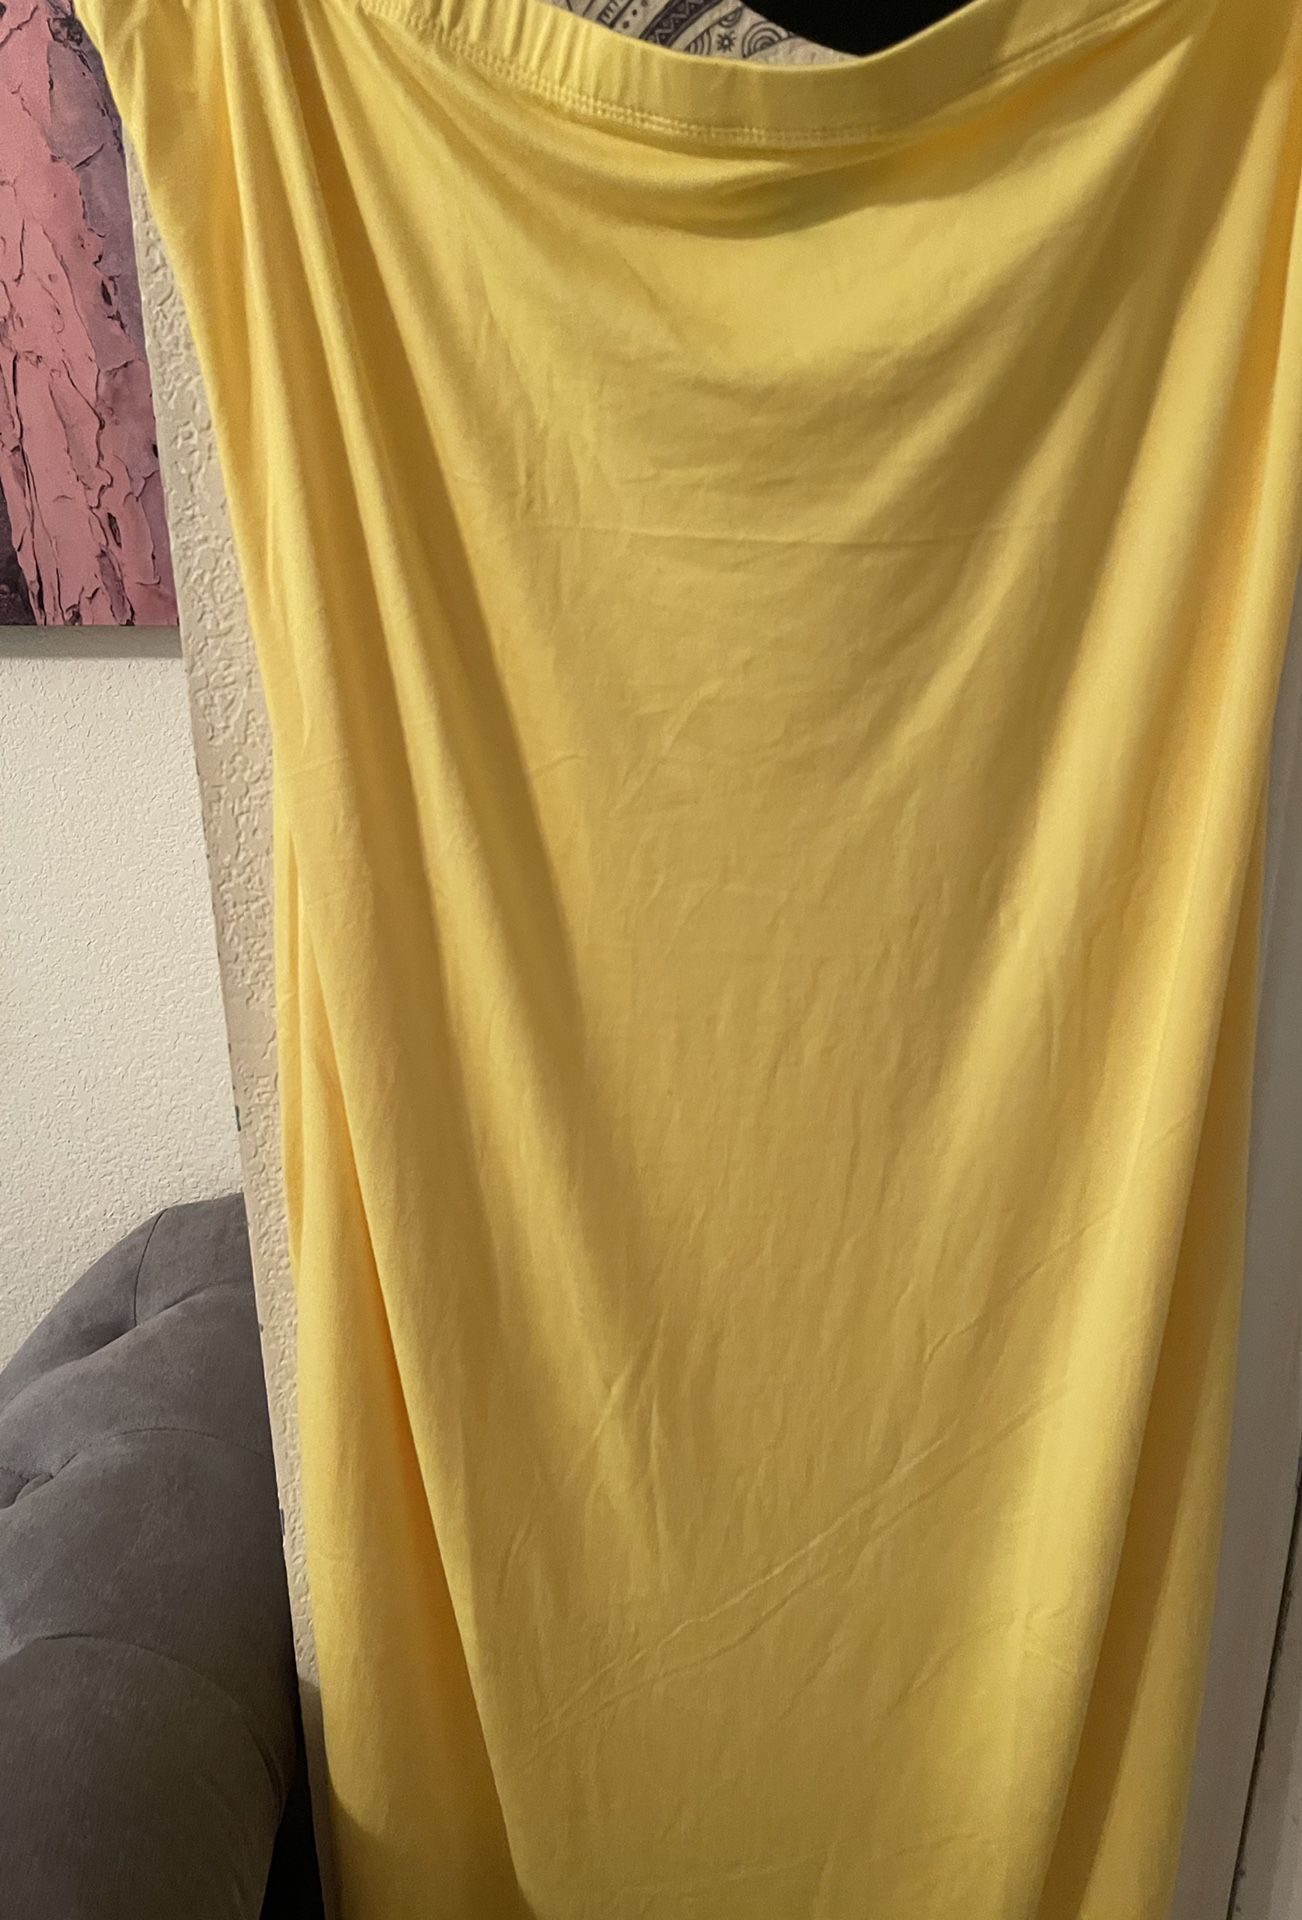 Plus size strapless yellow thin long dress size 3X New 